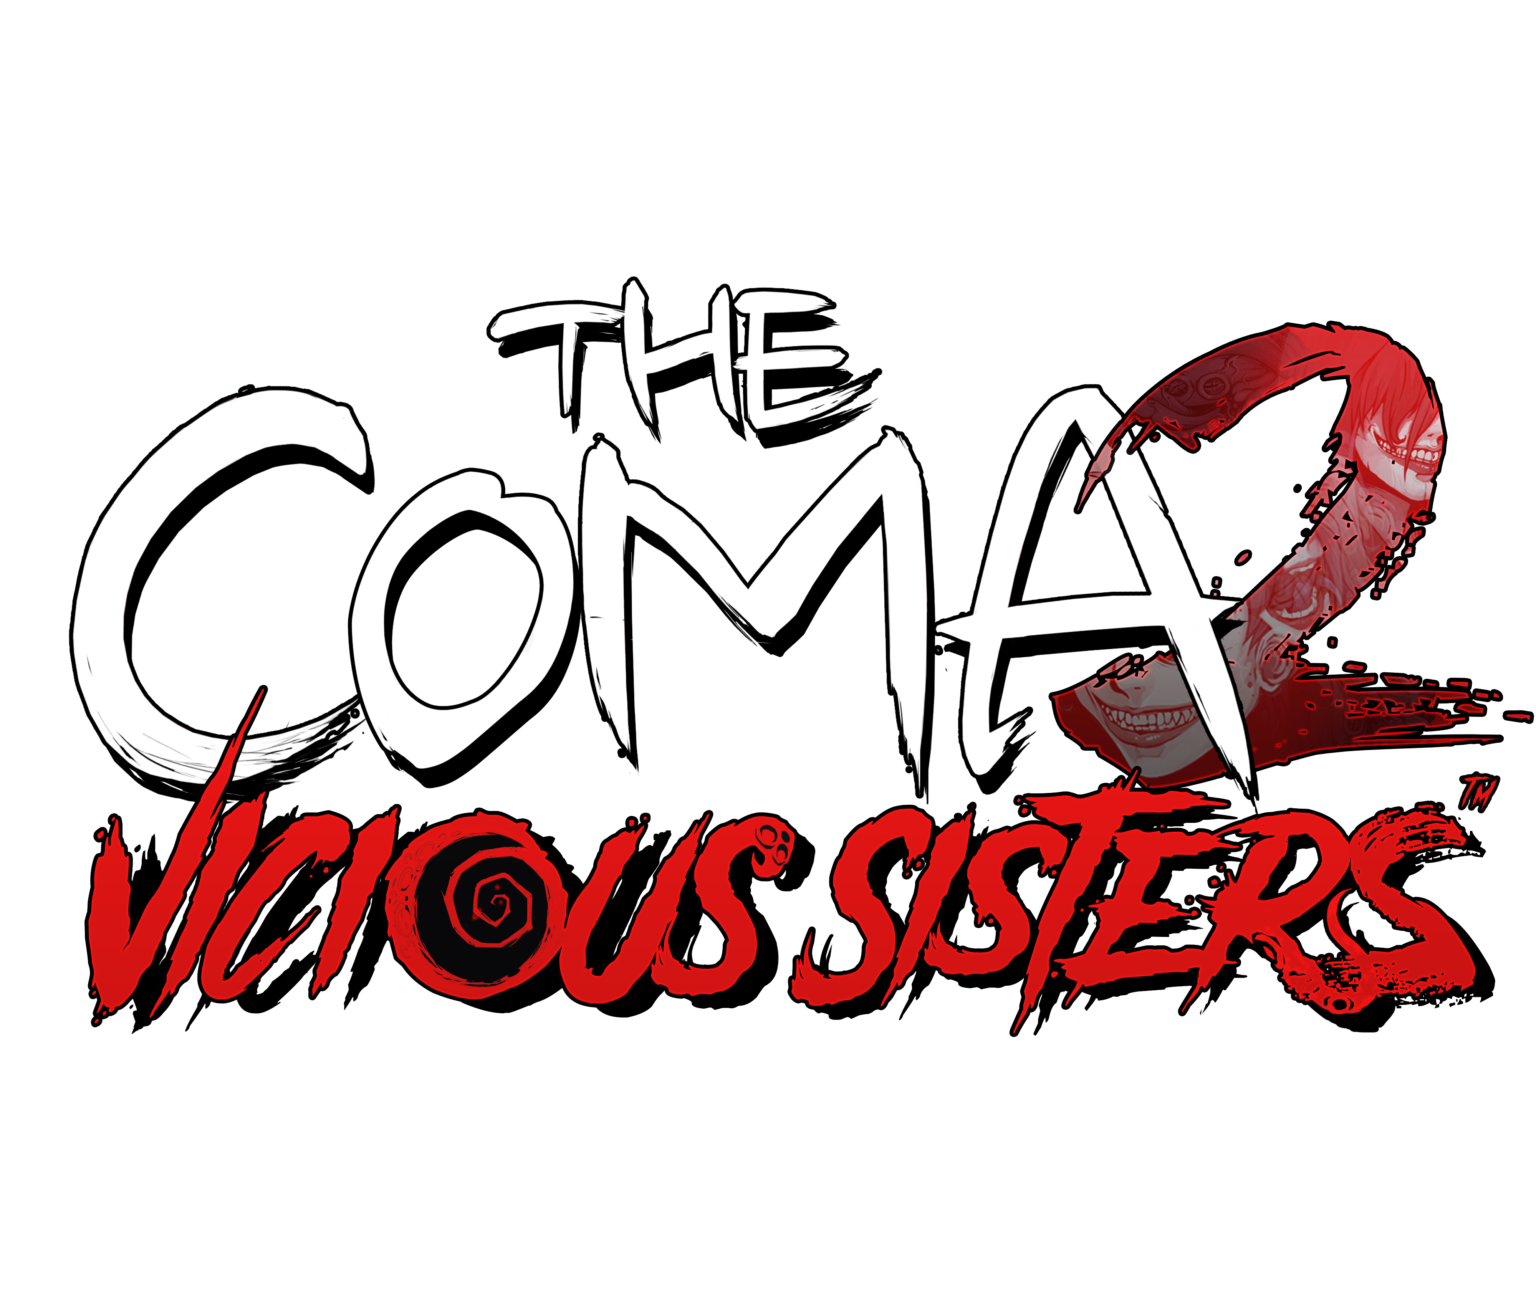 Coma vicious sisters